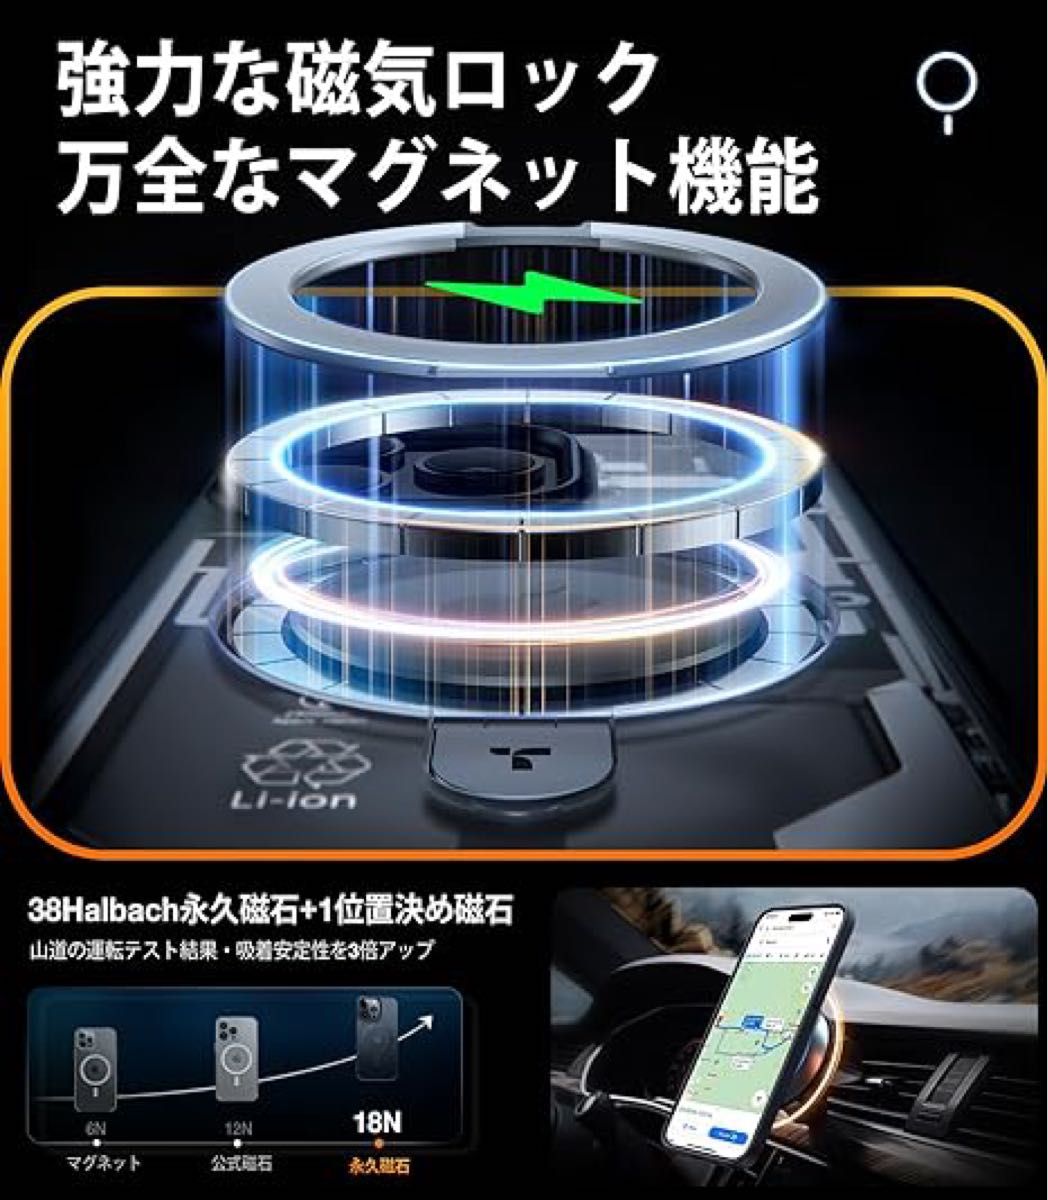 ♪TORRAS iPhone15 Pro専用ケース 縦横両対応 アジャスタブルスタンド 半透明 ワイアレス充電 防指紋 ブラック♪